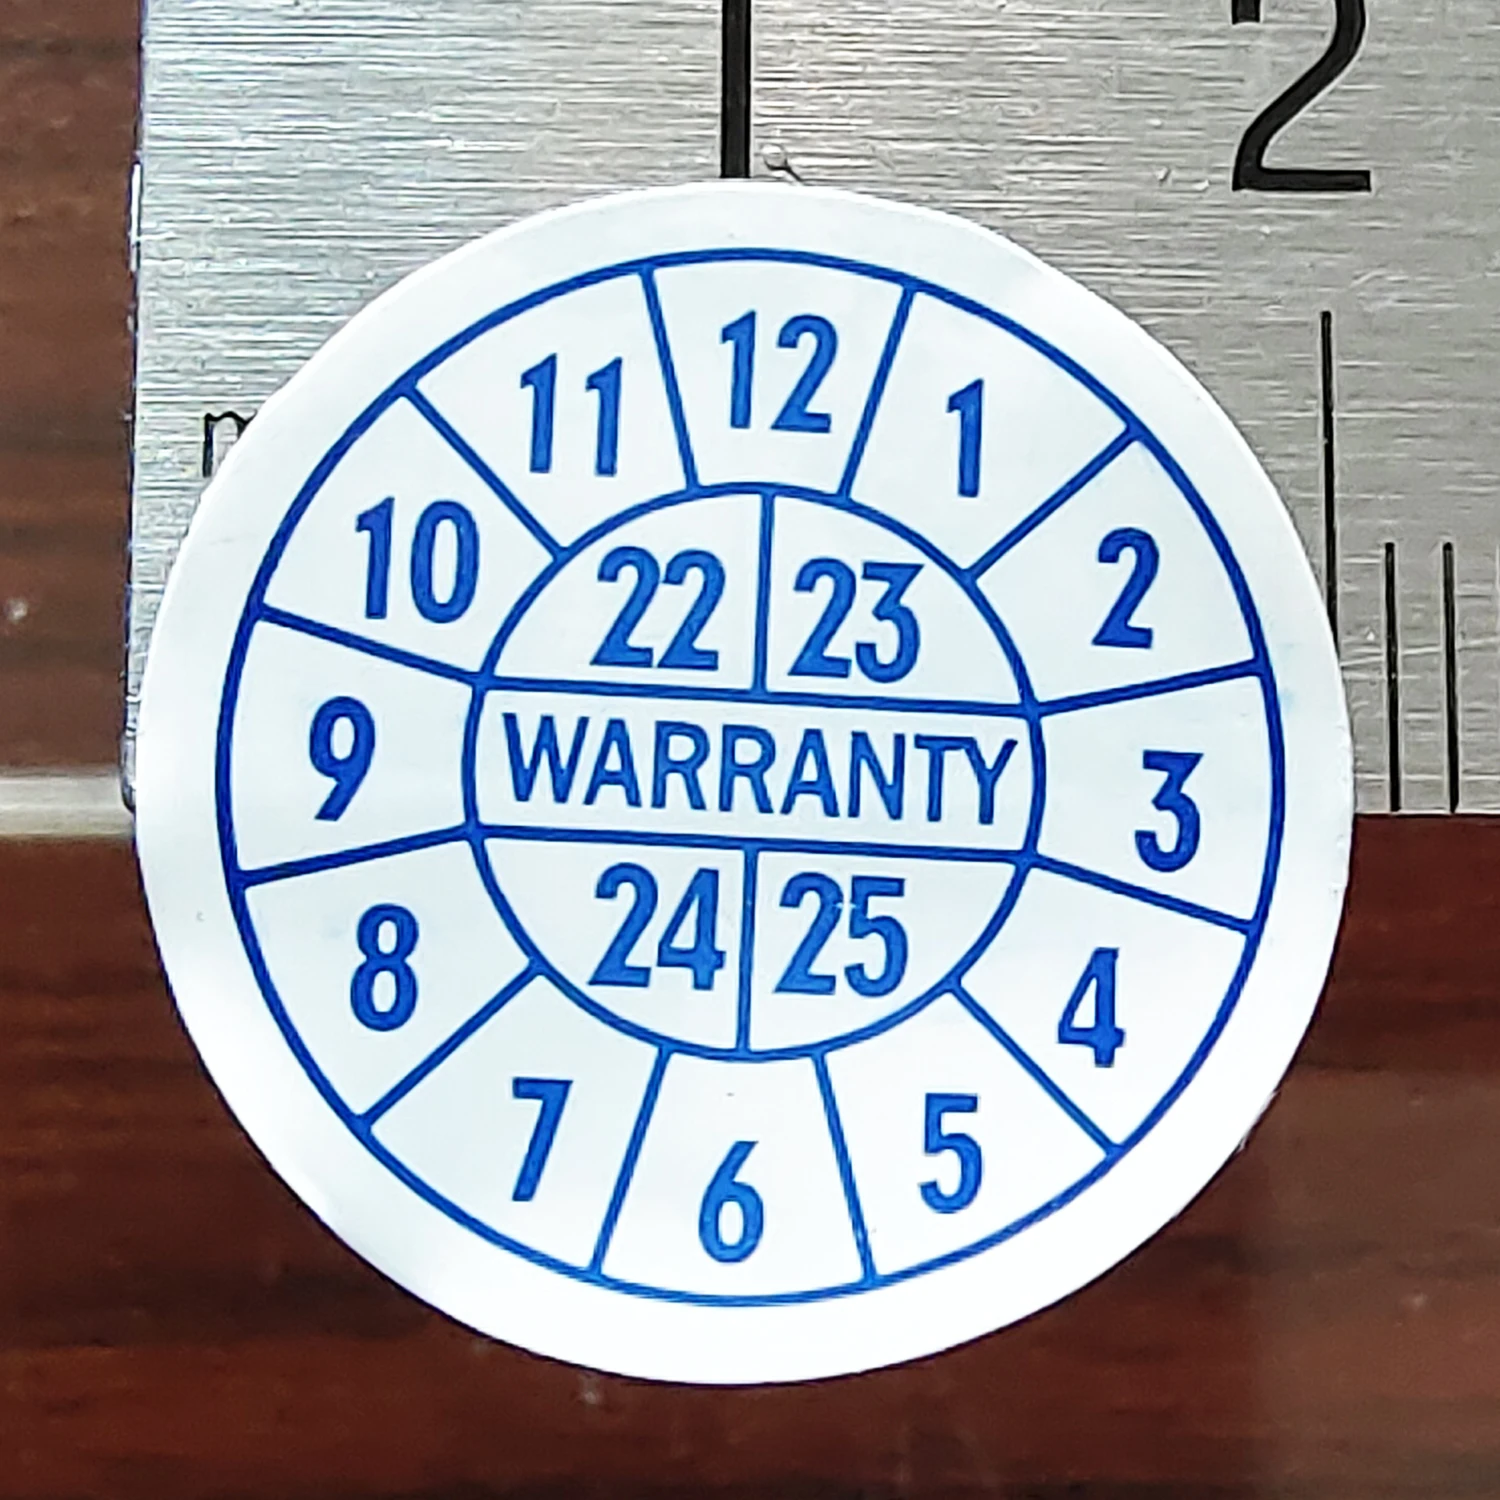 1000pcs/lot Warranty sealing label sticker void if tampered, diameter 2cm, Item No. V16